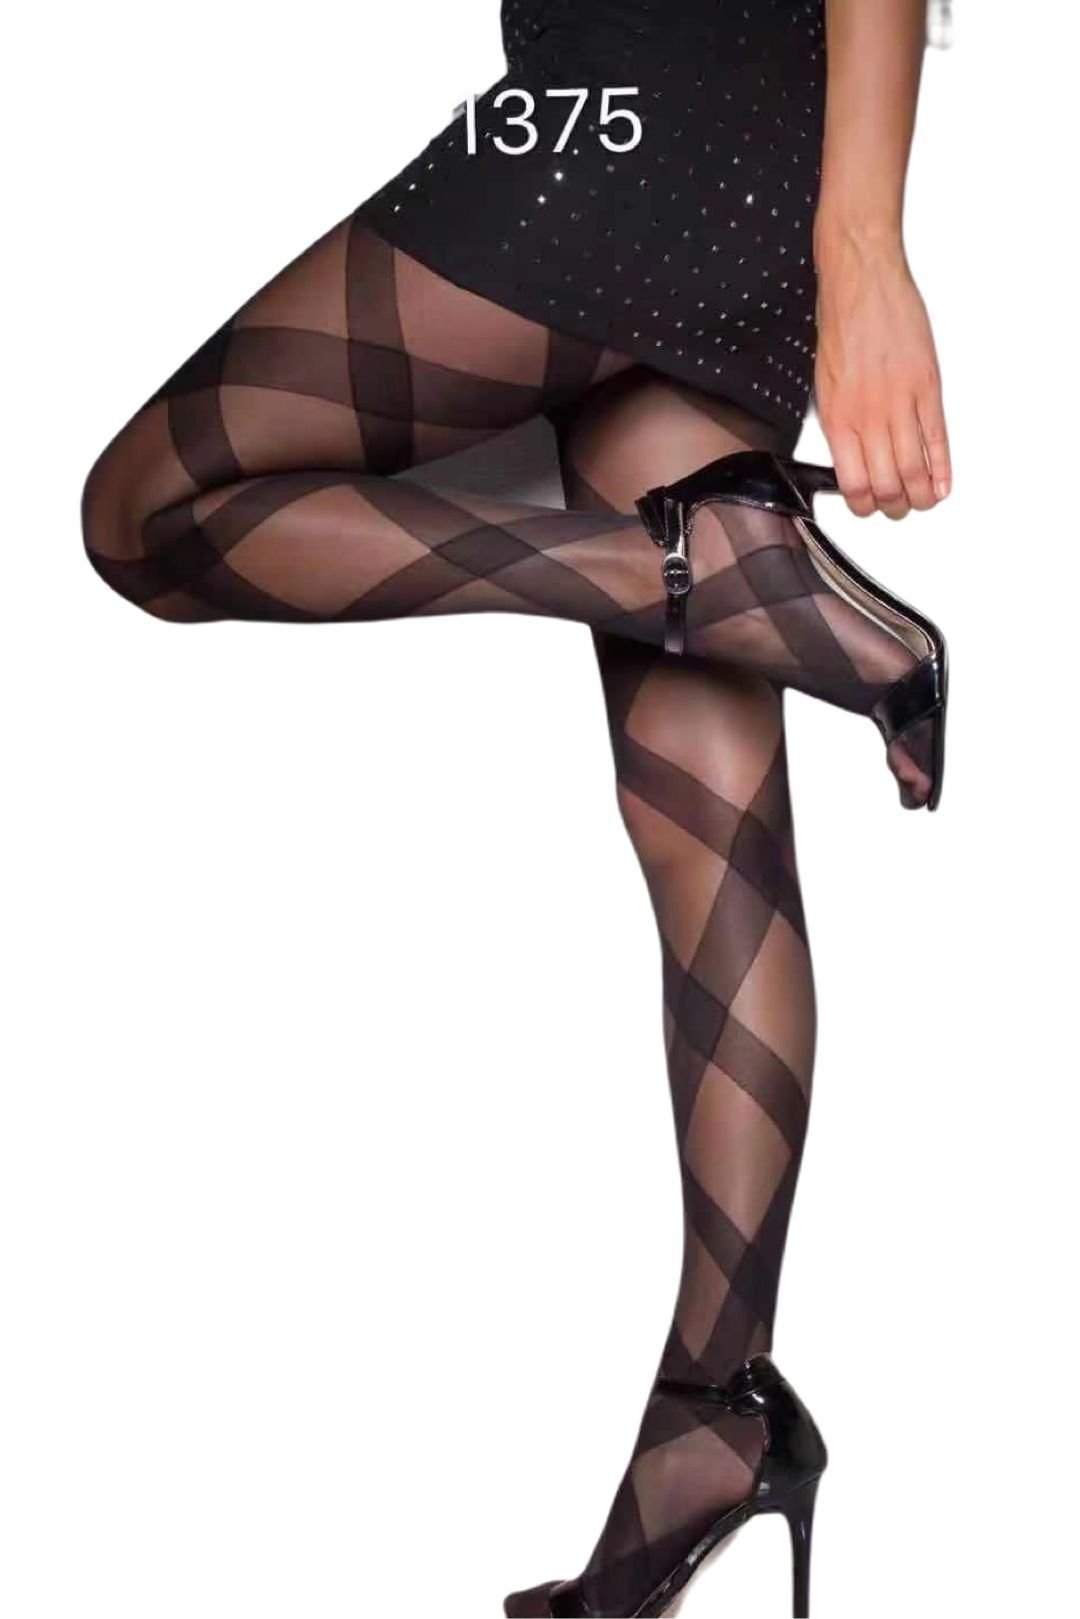 Muster cofi1453 Feinstrumpfhose schwarz Hose mit Frauen Damen Strumpfhose Nero Socken